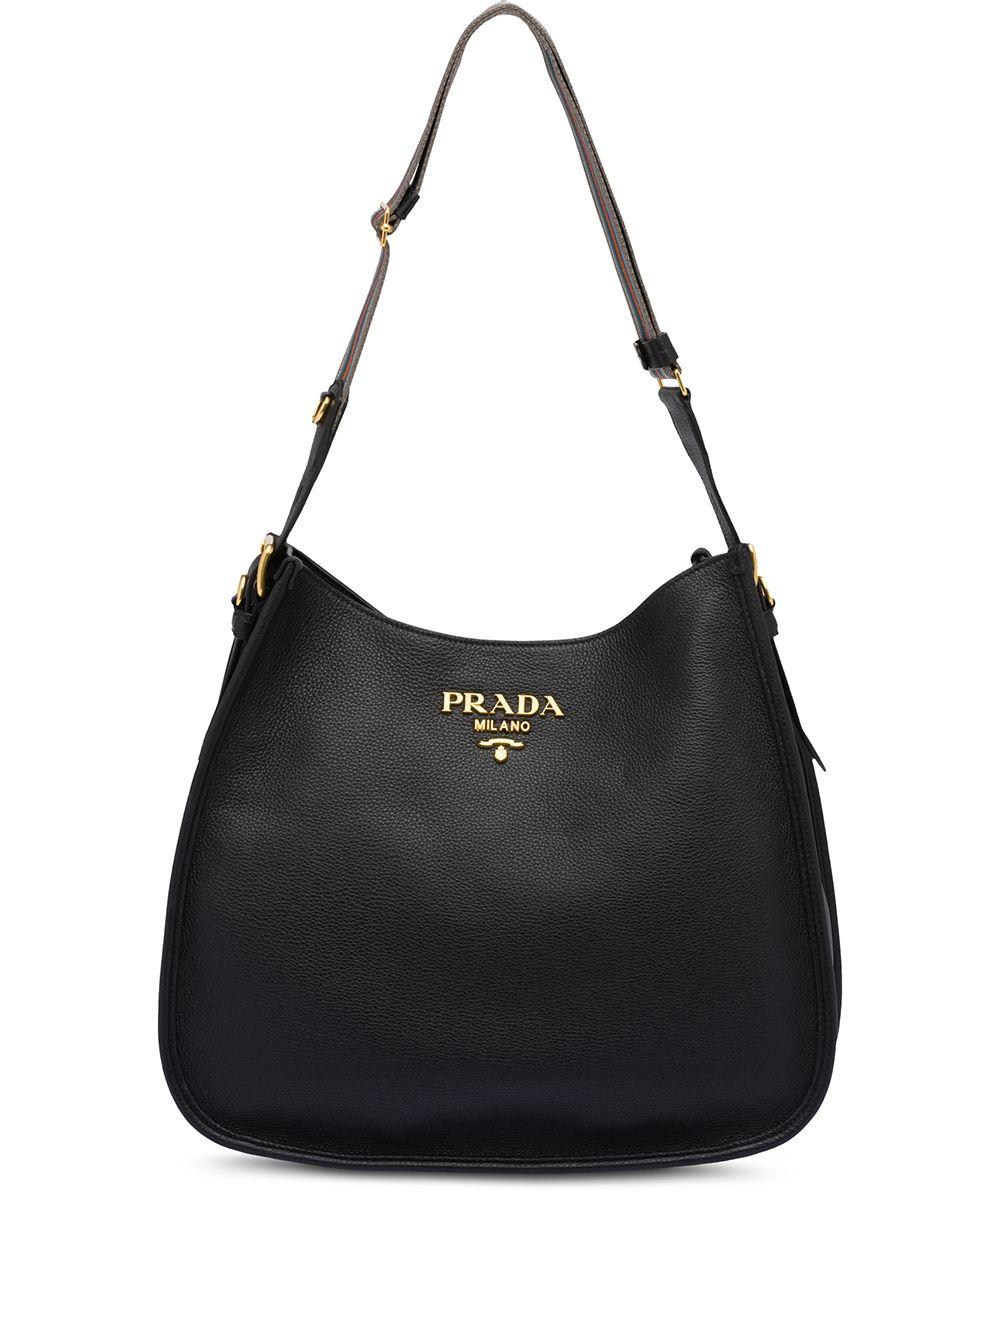 Prada Leather Front Logo Hobo Bag in Black | Lyst